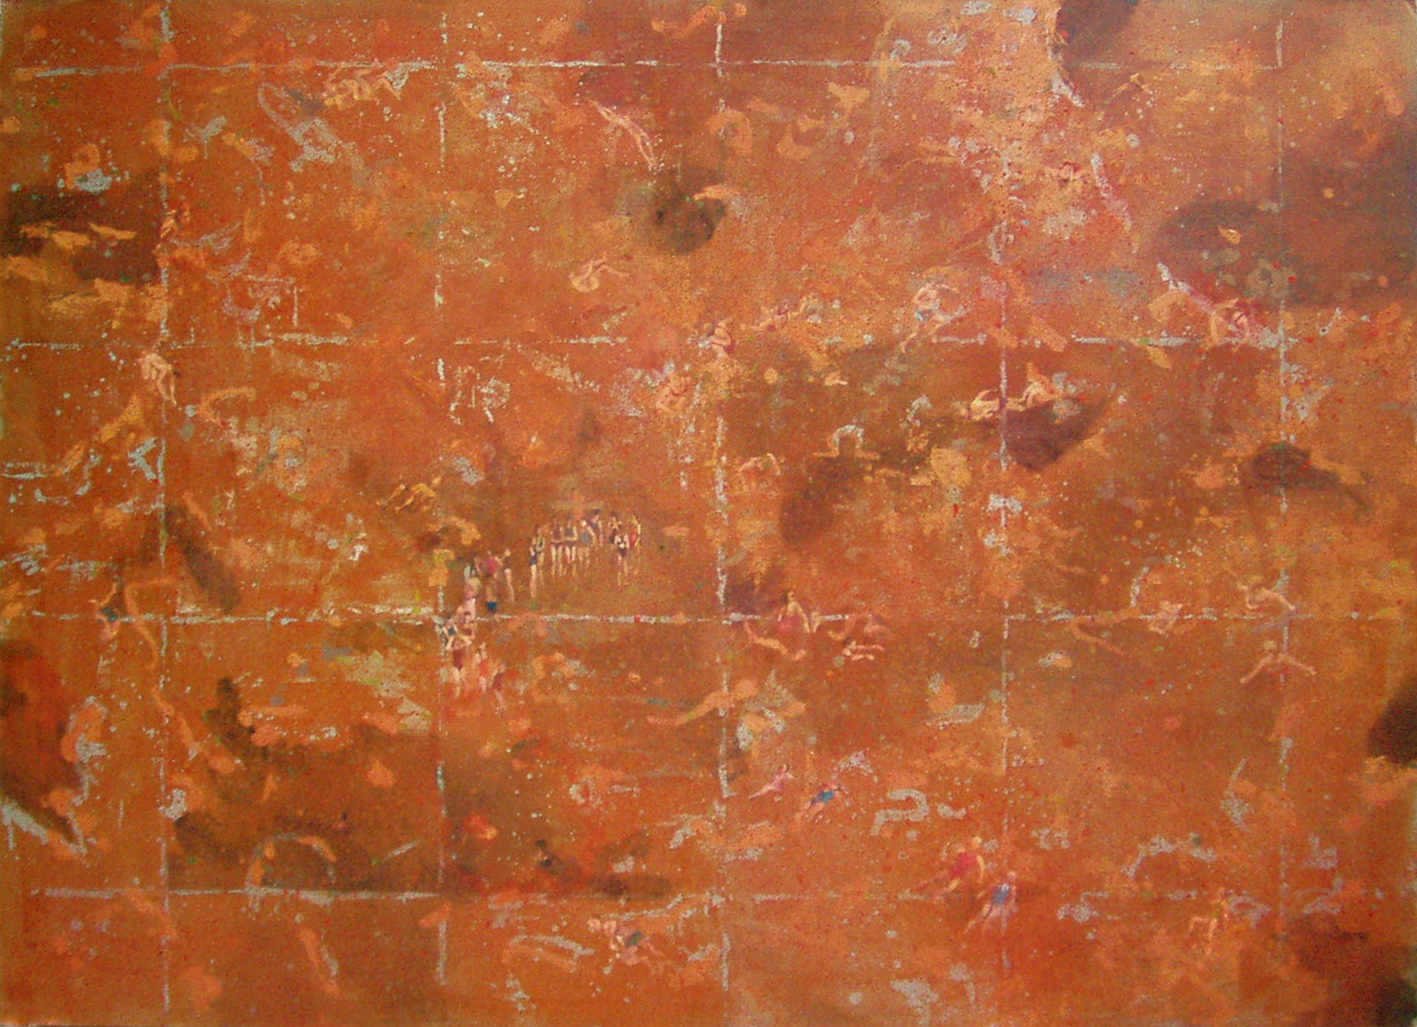 Rdeči bazen, 2009, olje na platno, 140 x 190 cm